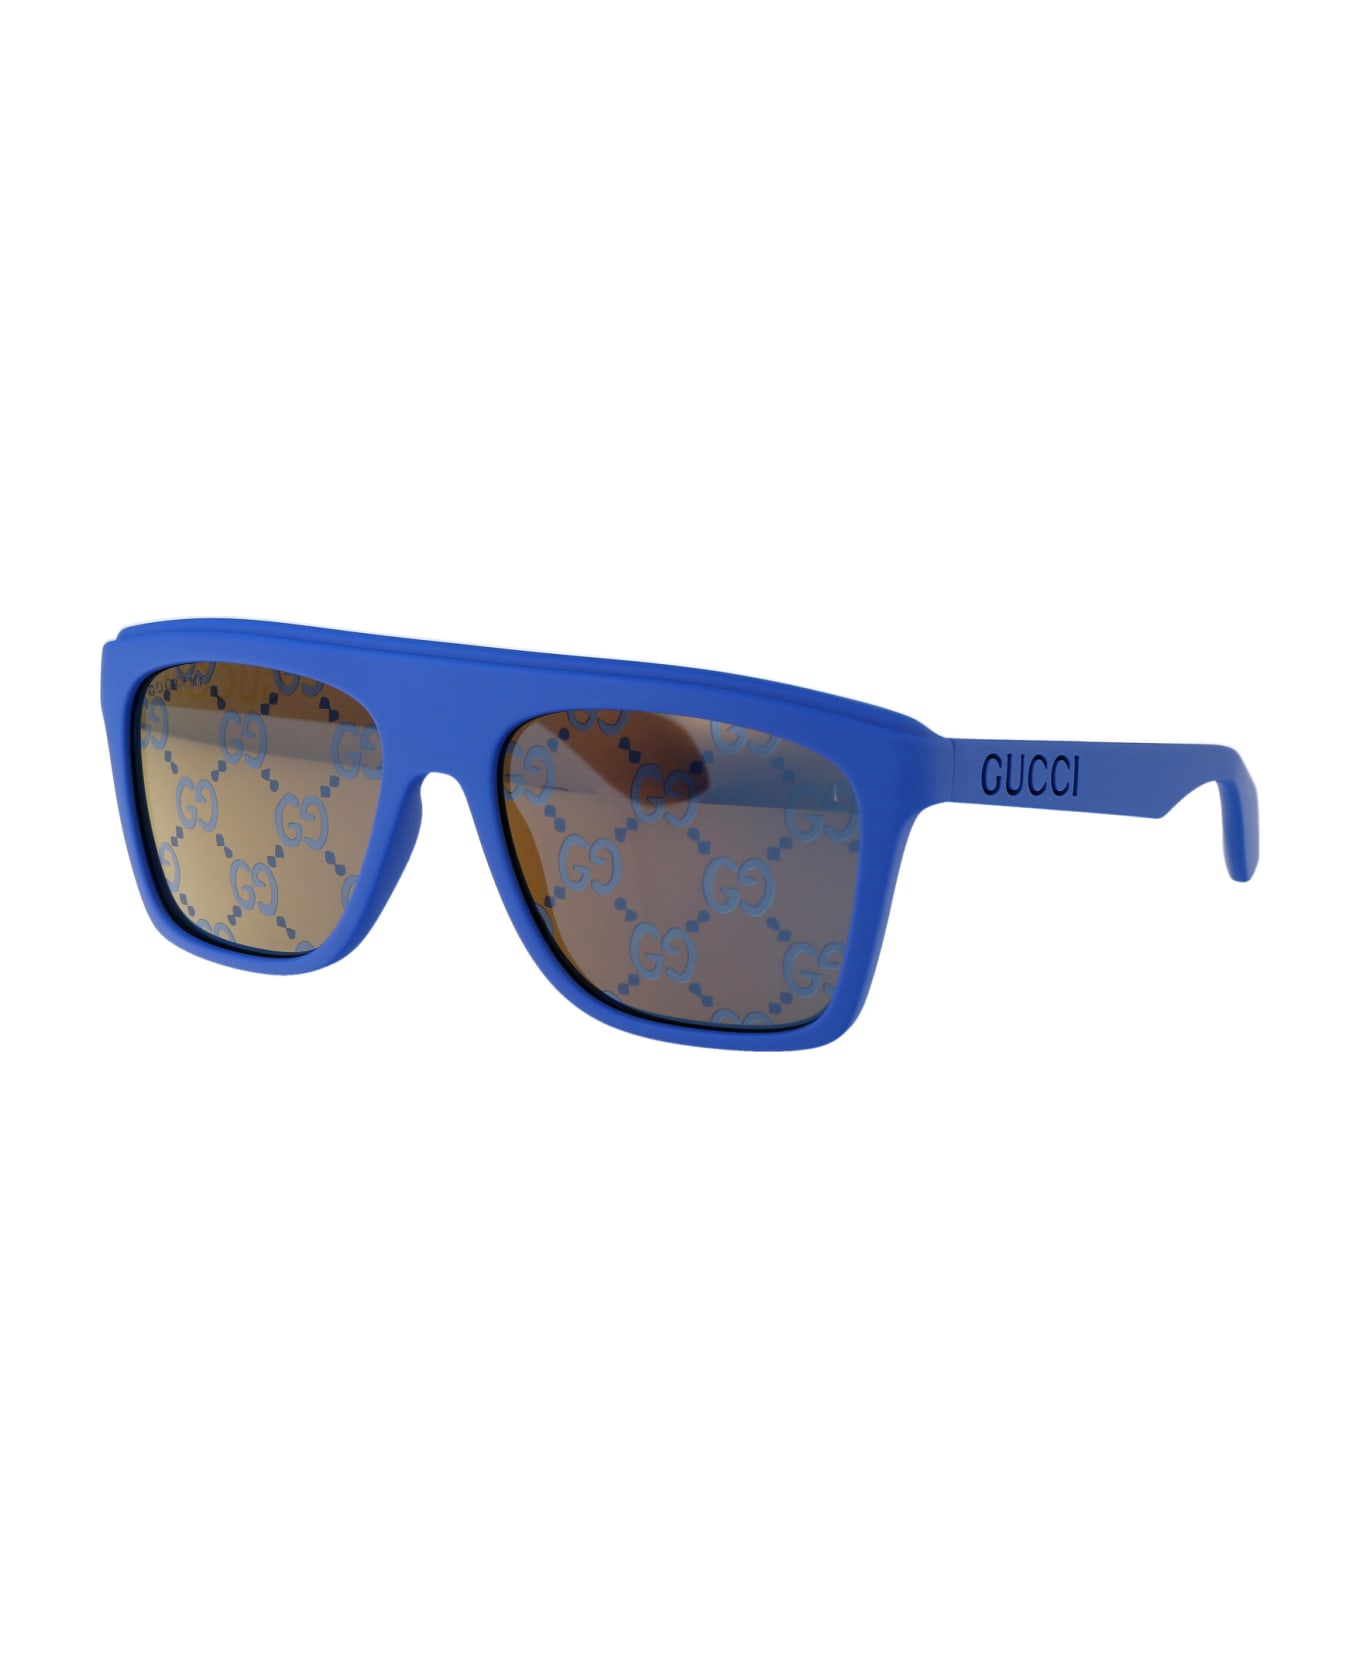 Gucci Eyewear Gg1570s Sunglasses - 004 BLUE BLUE BLUE